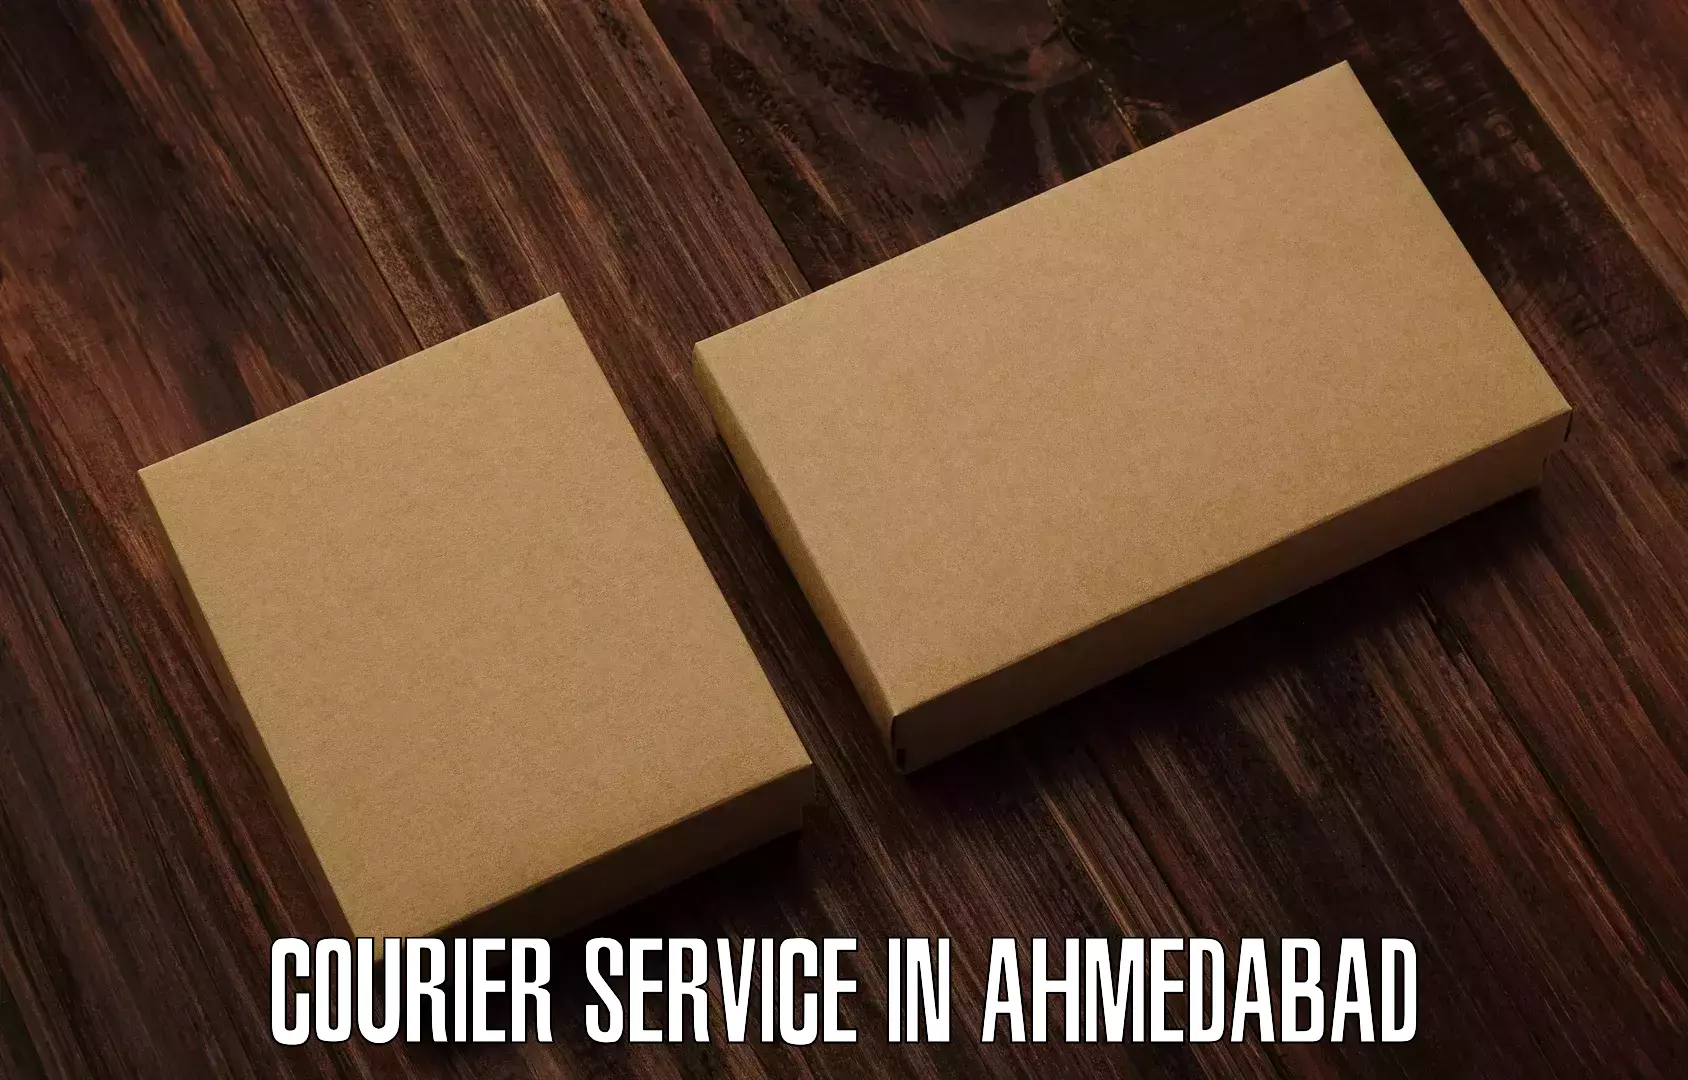 Comprehensive logistics in Ahmedabad